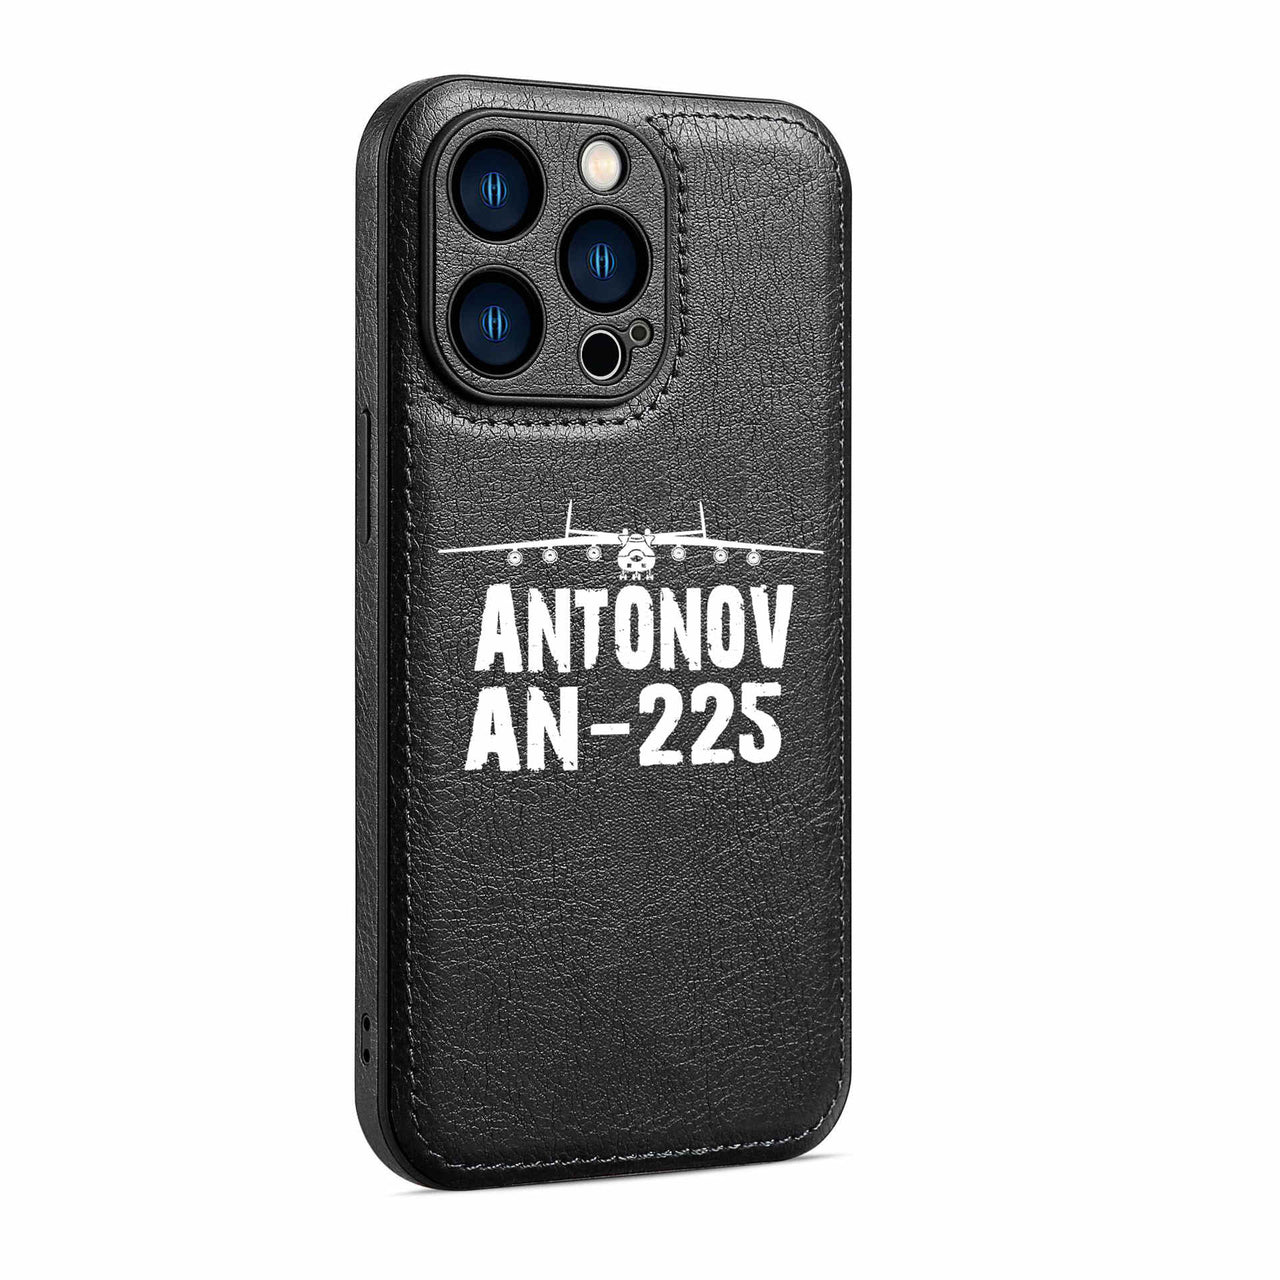 Antonov AN-225 & Plane Designed Leather iPhone Cases